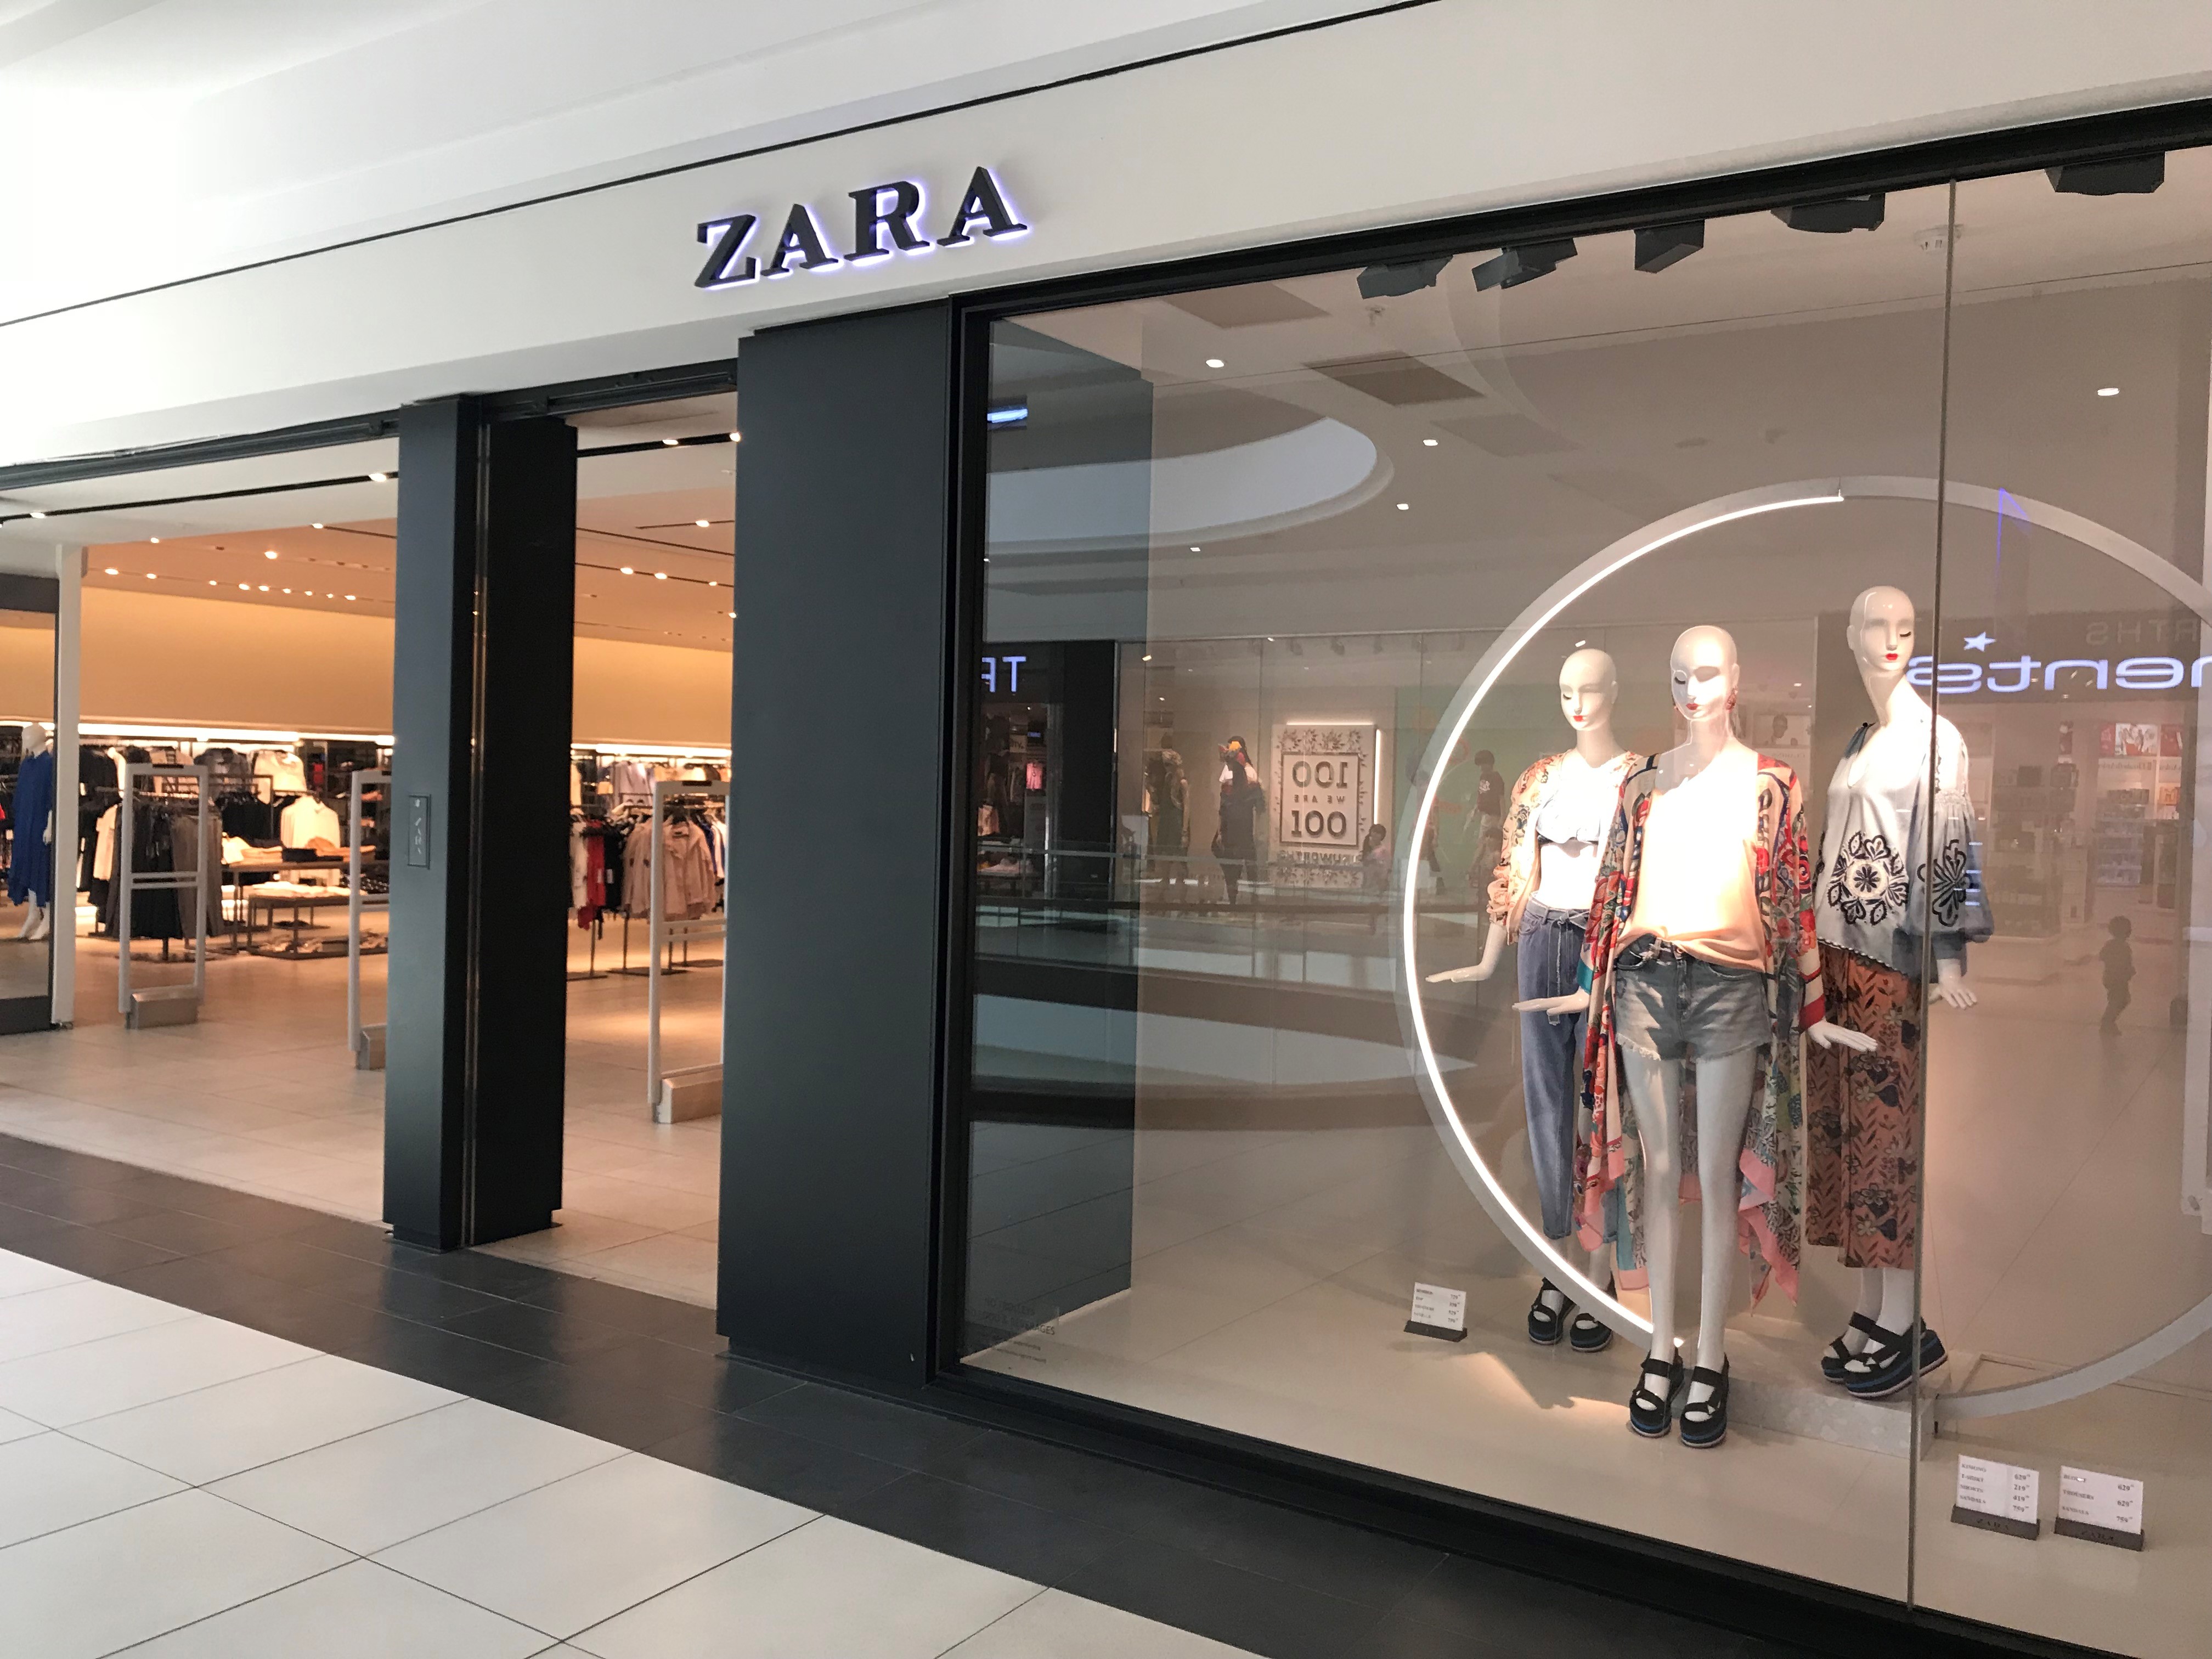 South Africa: Zara accused of design 